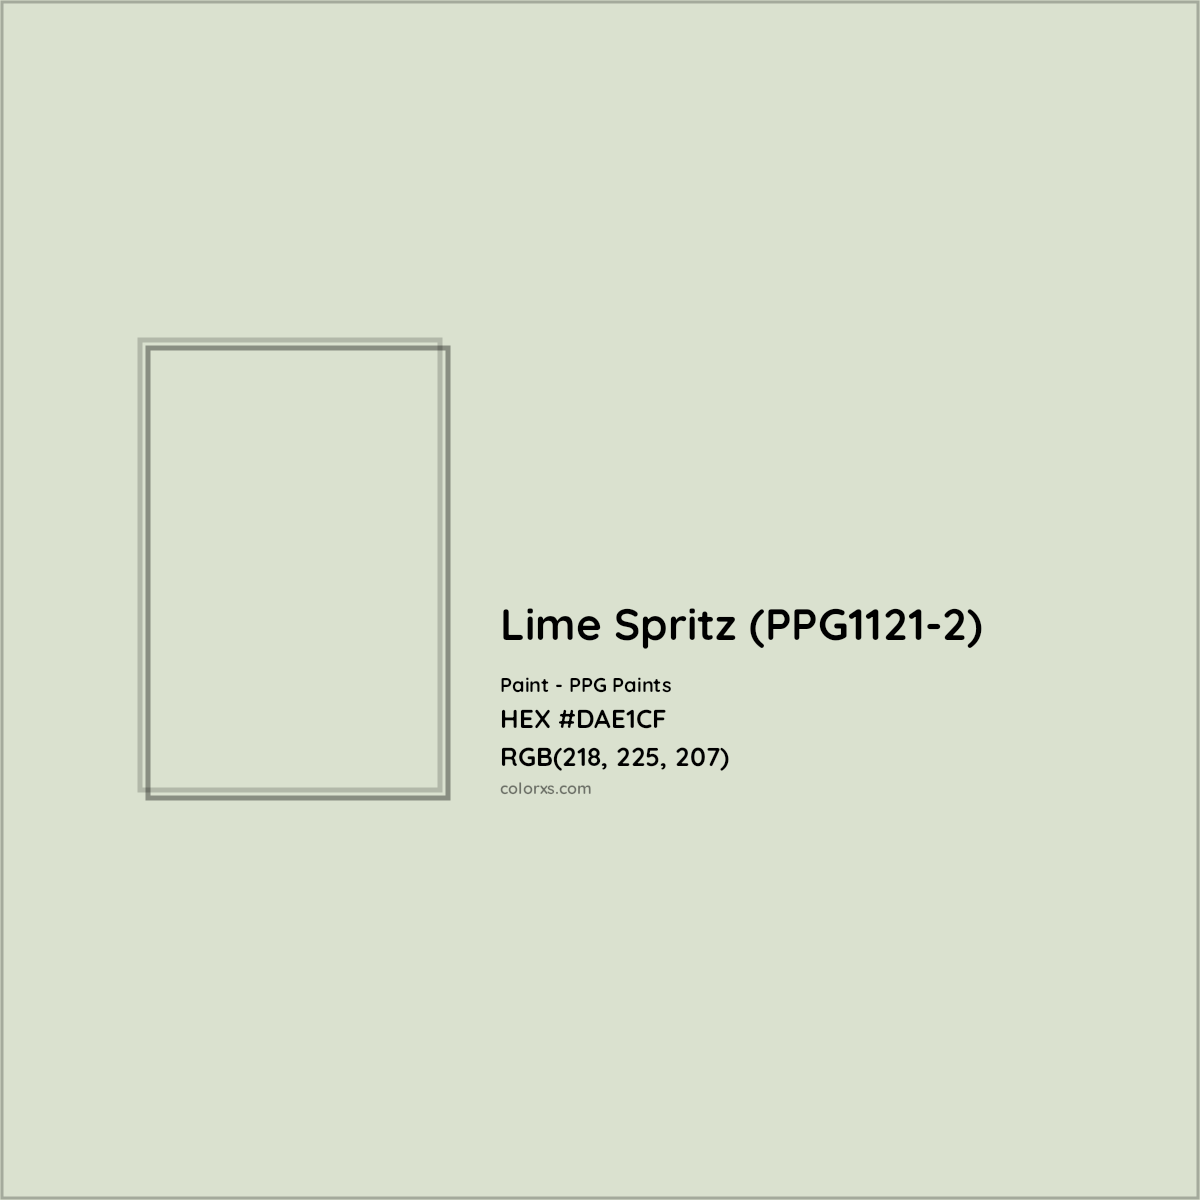 HEX #DAE1CF Lime Spritz (PPG1121-2) Paint PPG Paints - Color Code